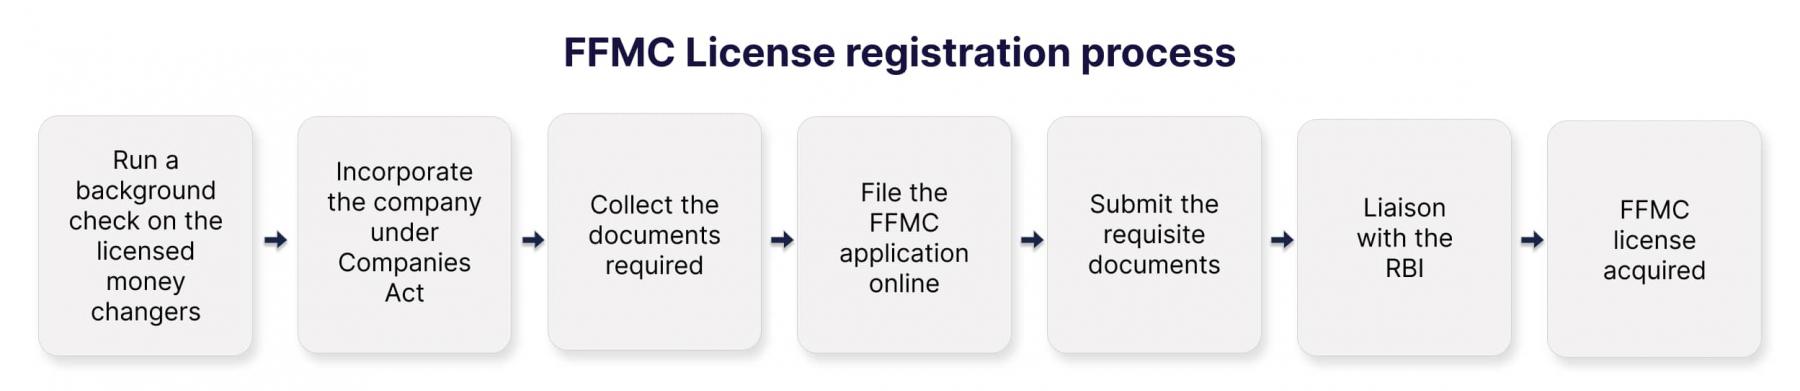 FFMC License RBI Registration Process